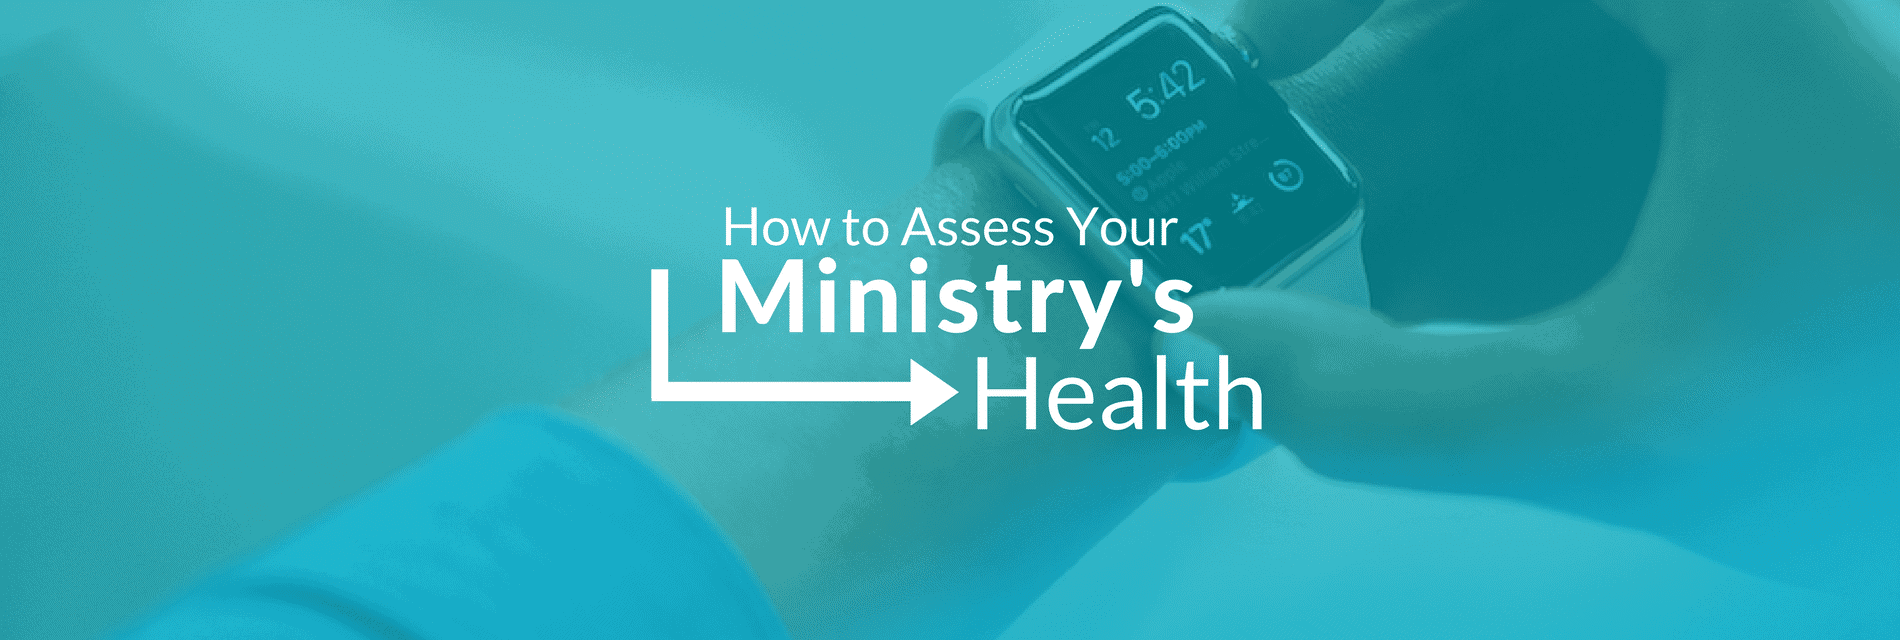 ministry health assessment